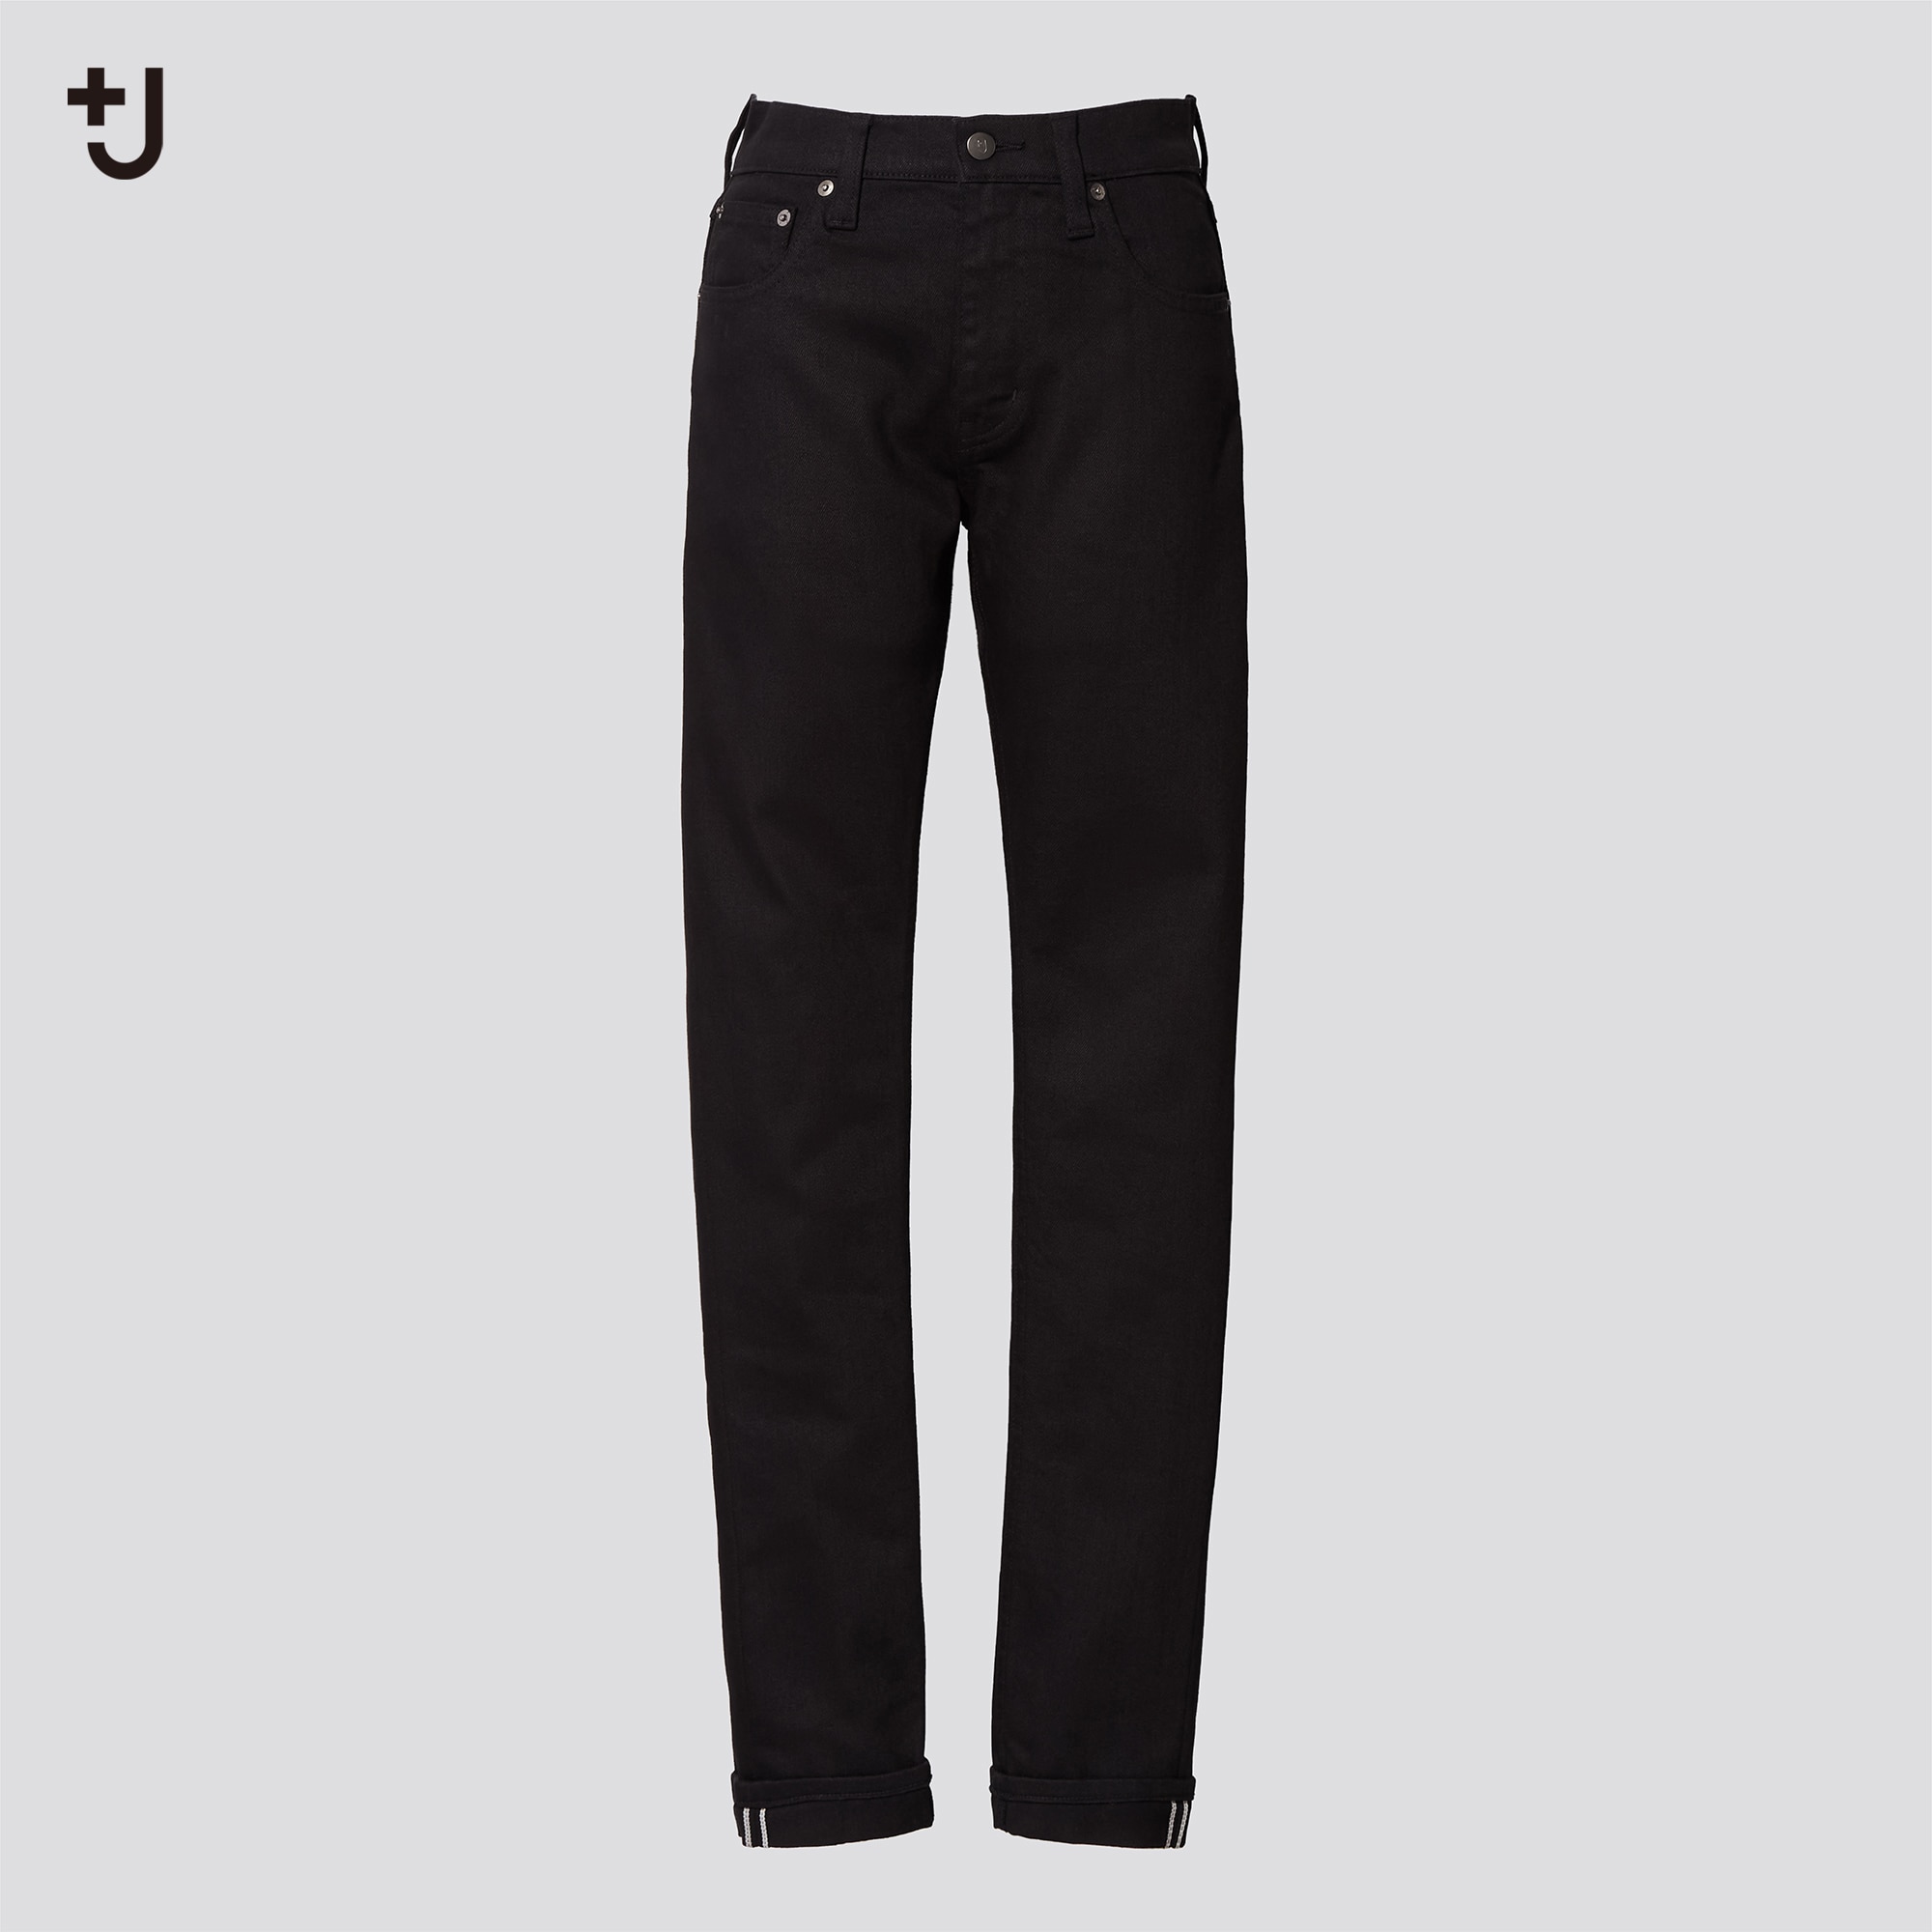 MEN FASHION Trousers Casual discount 56% Jack & Jones slacks Navy Blue 